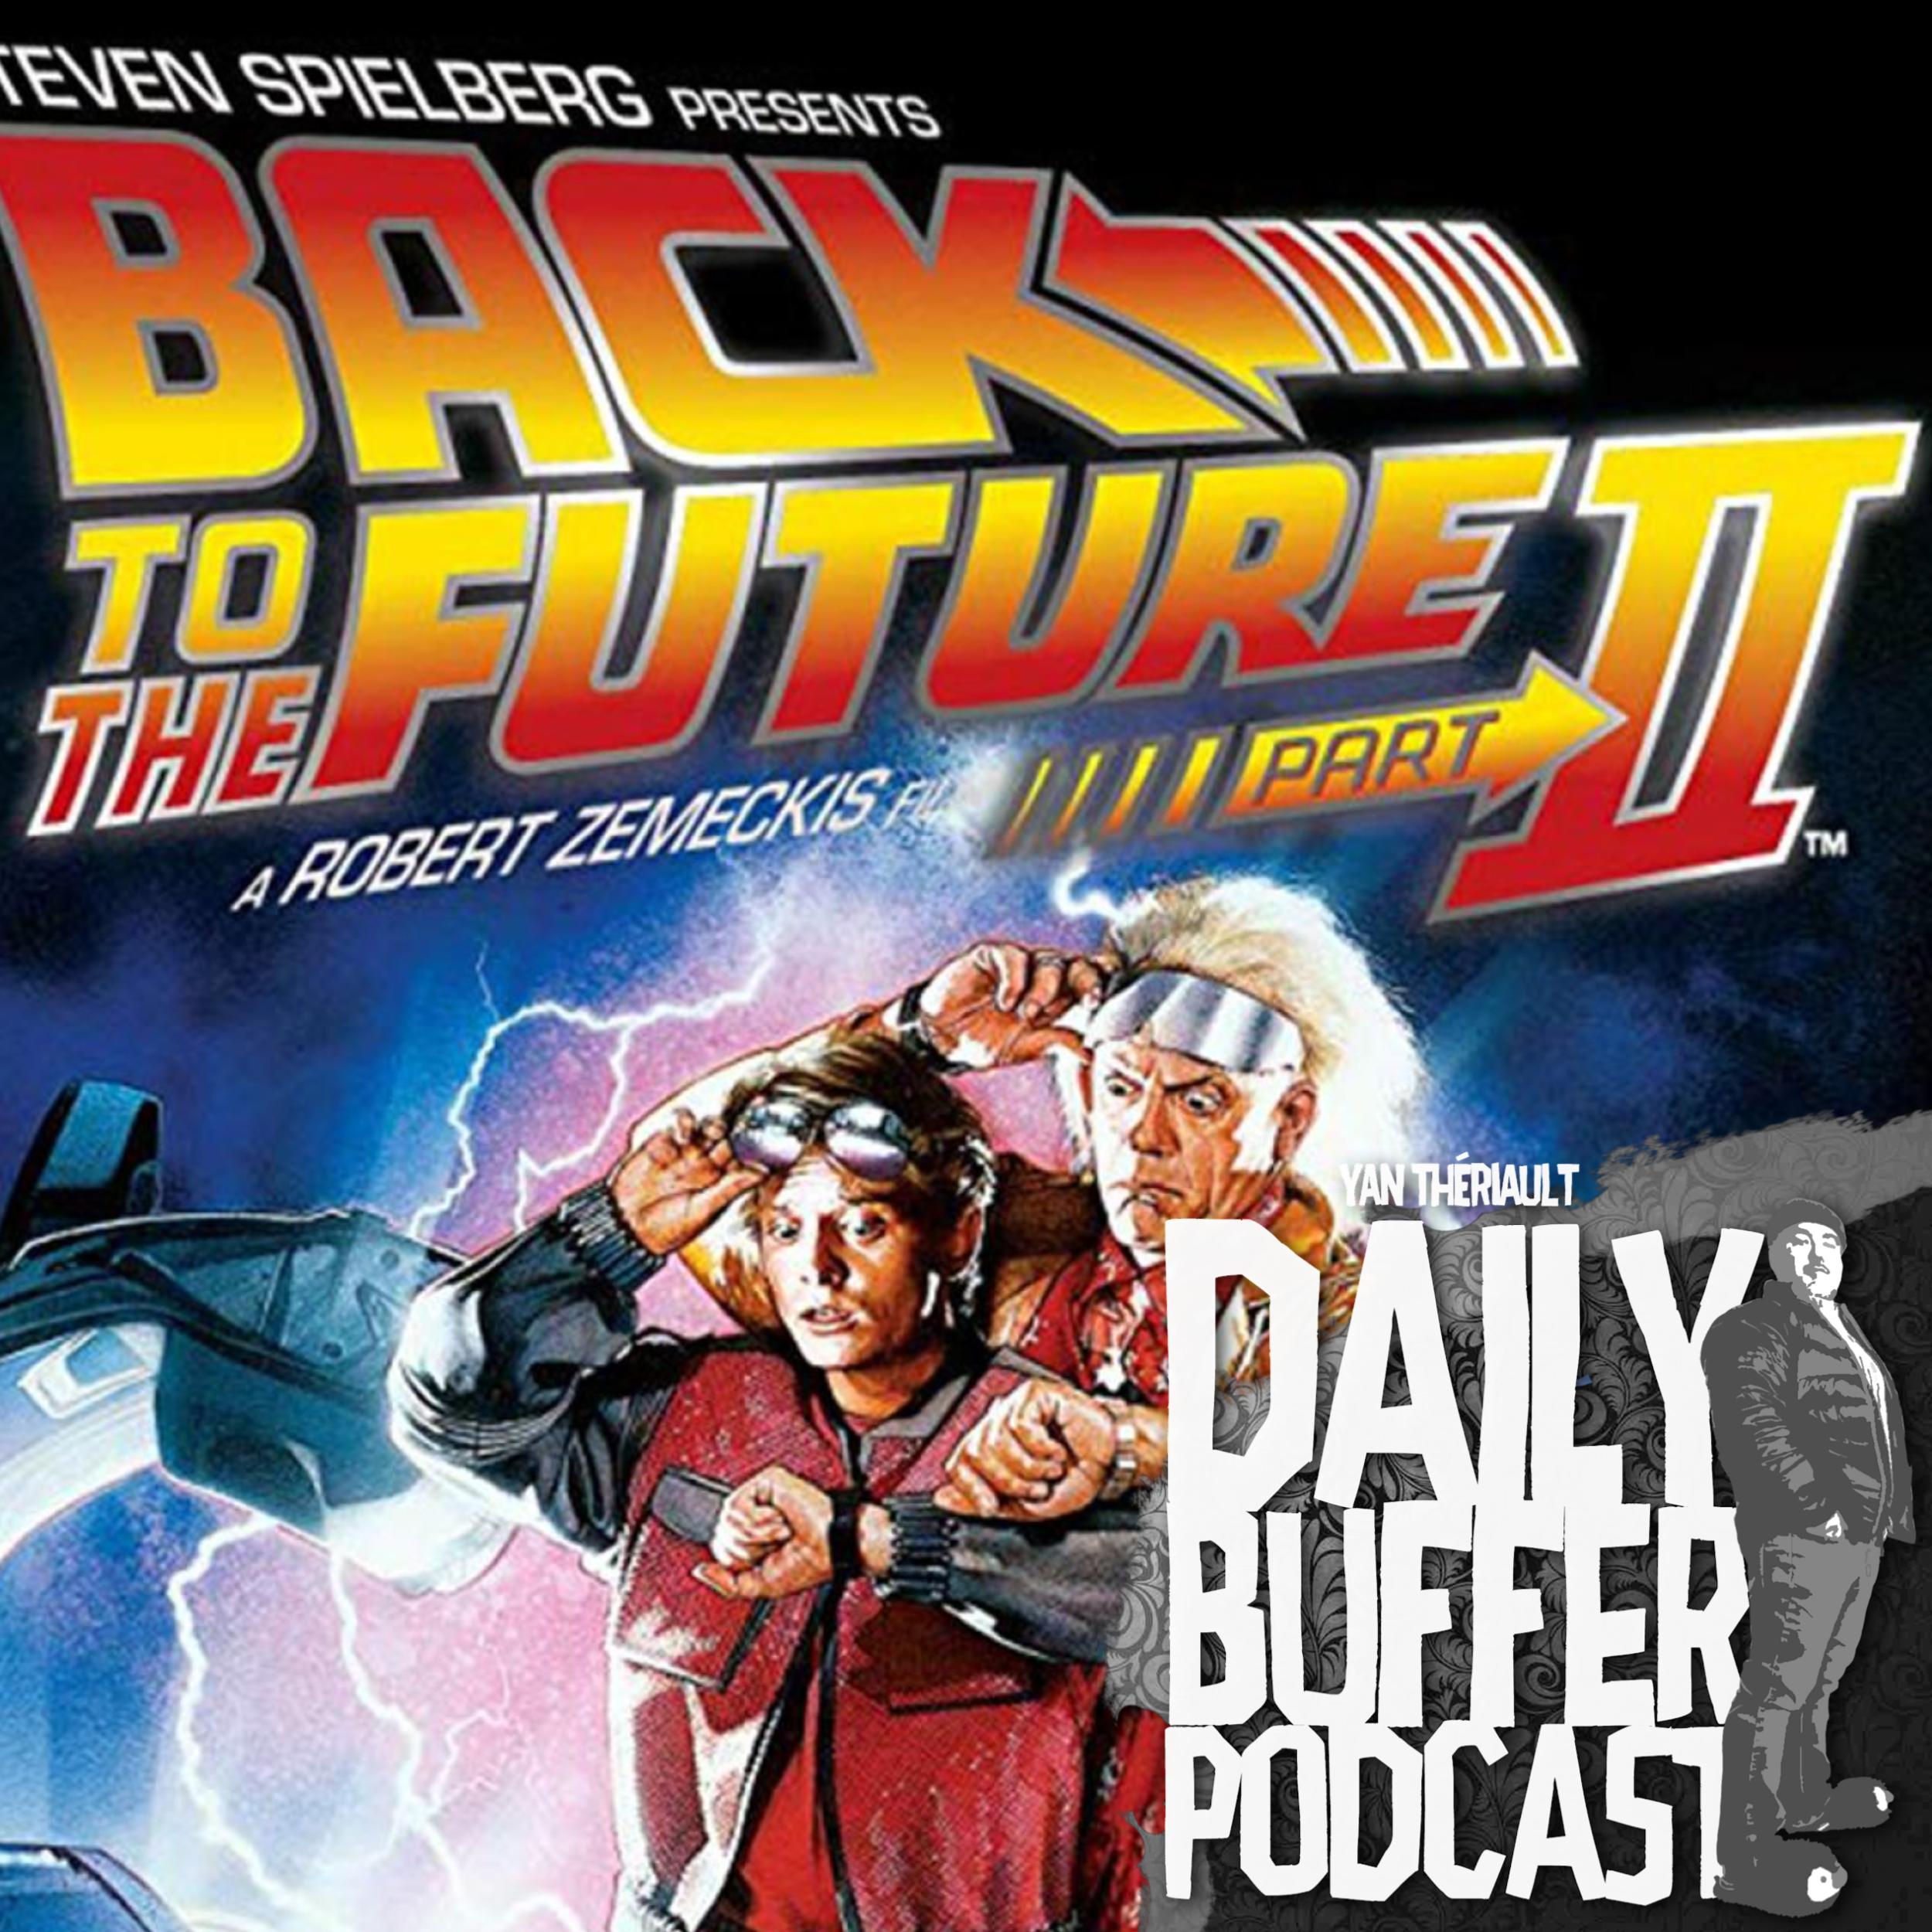 Back To The Future predisait le 11 septembre - Le Daily Buffer Podcast - 20